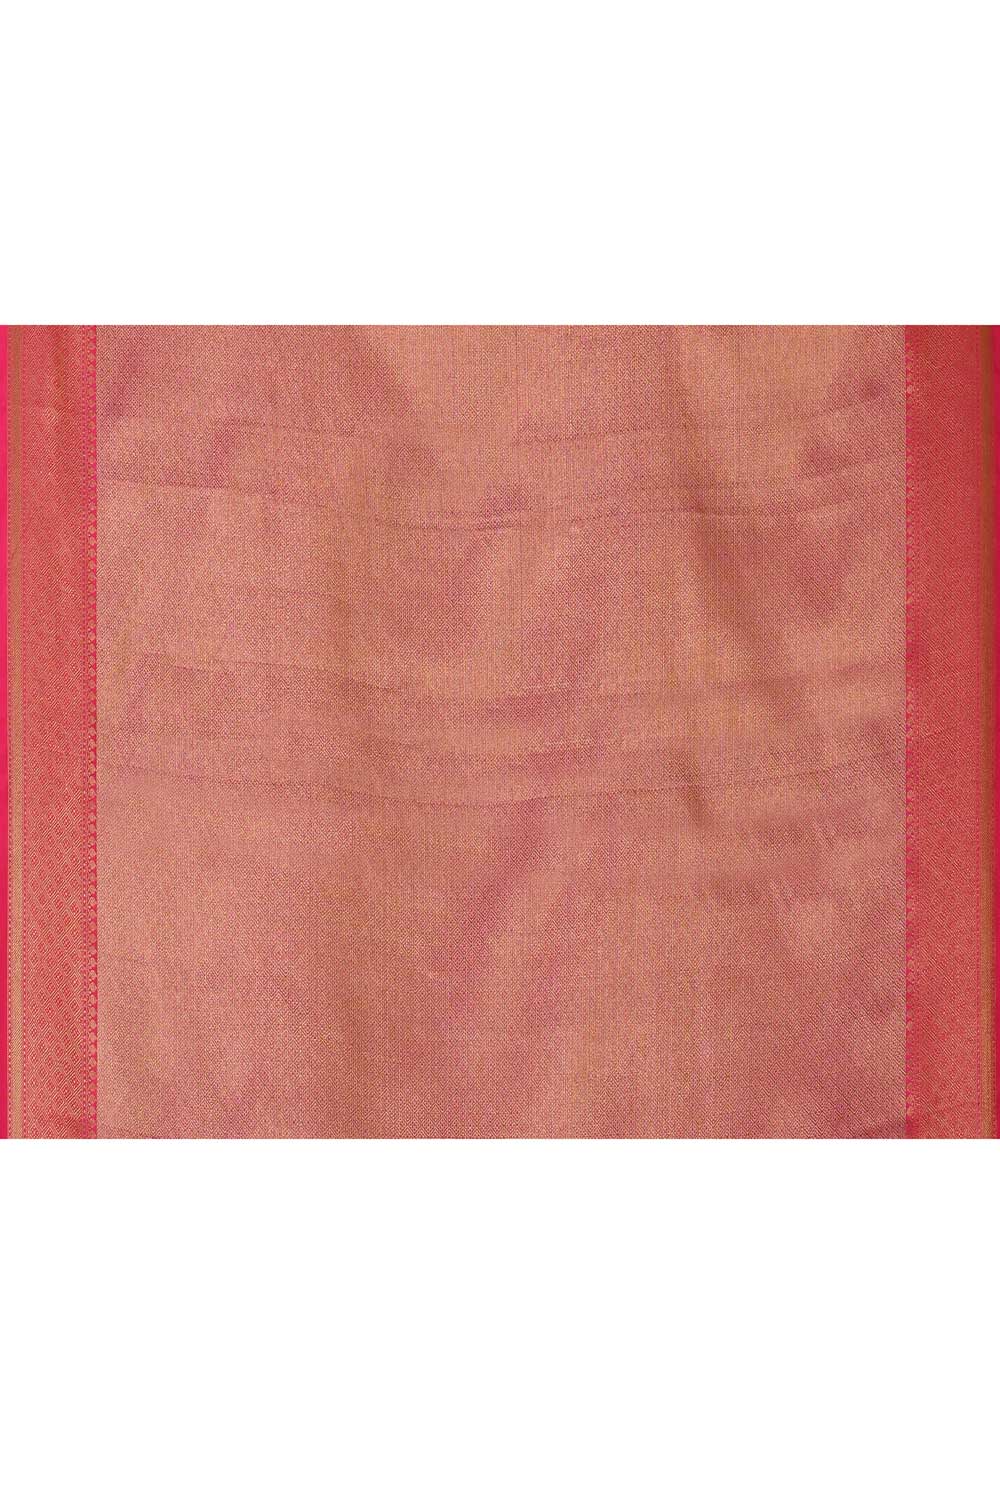 Grey Pink Cotton Kota Check Banaras Handloom Saree